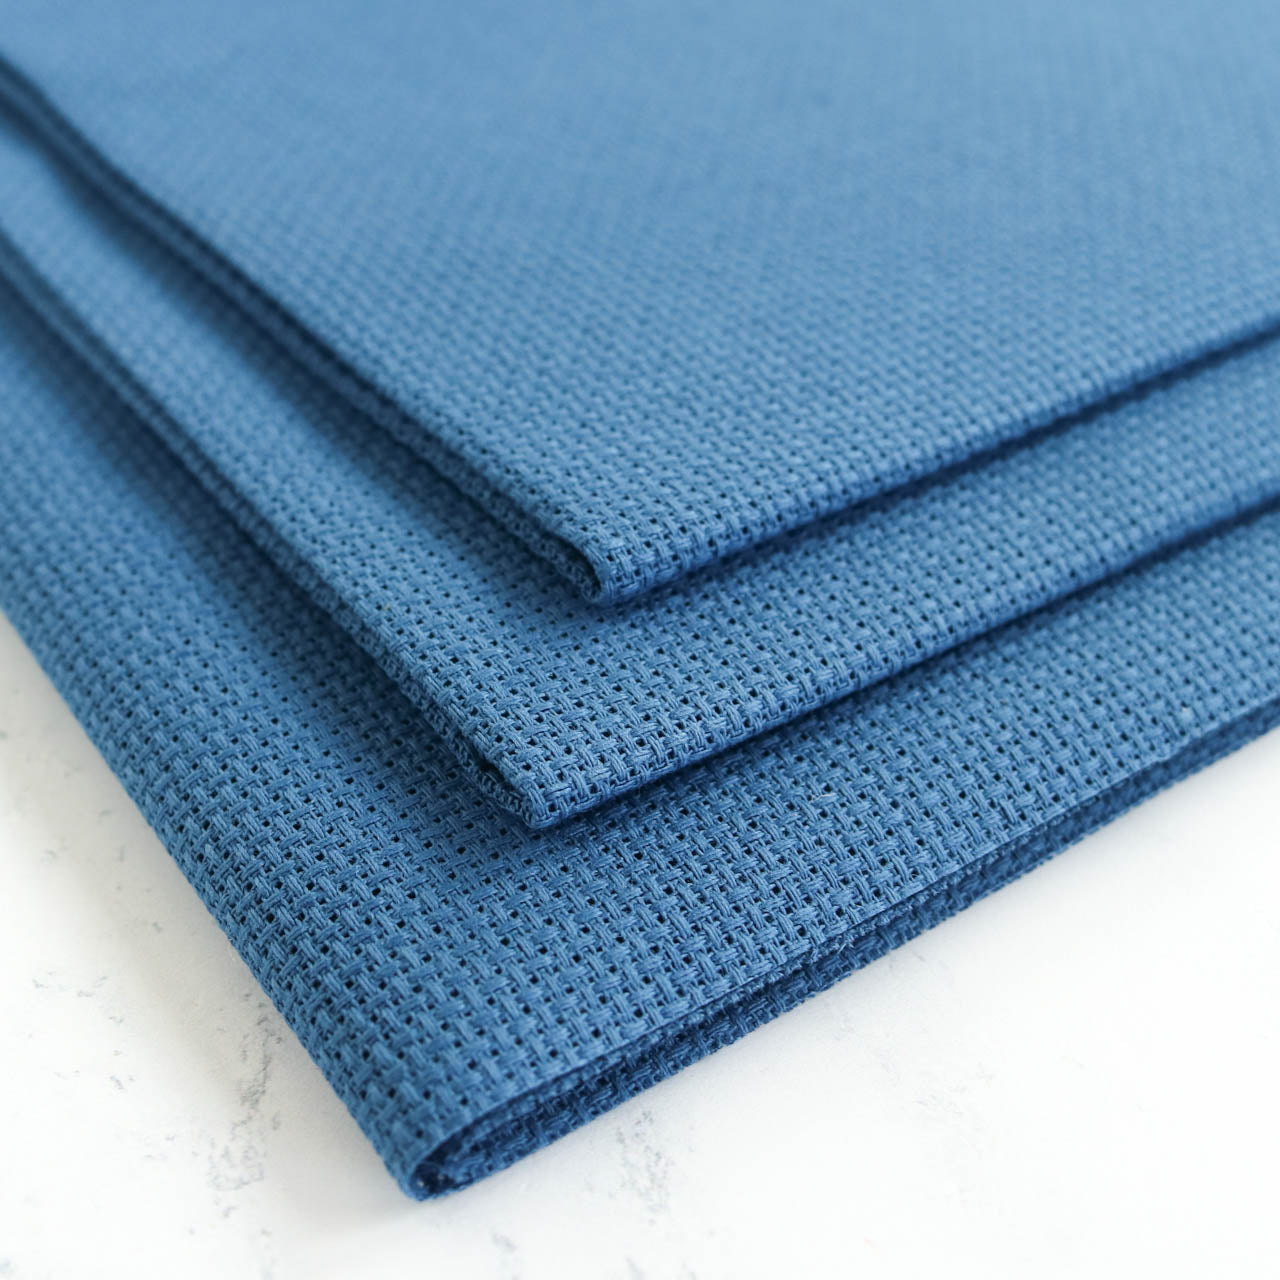 Light Blue Aida Cross Stitch Fabric - 14 Count - Stitched Modern